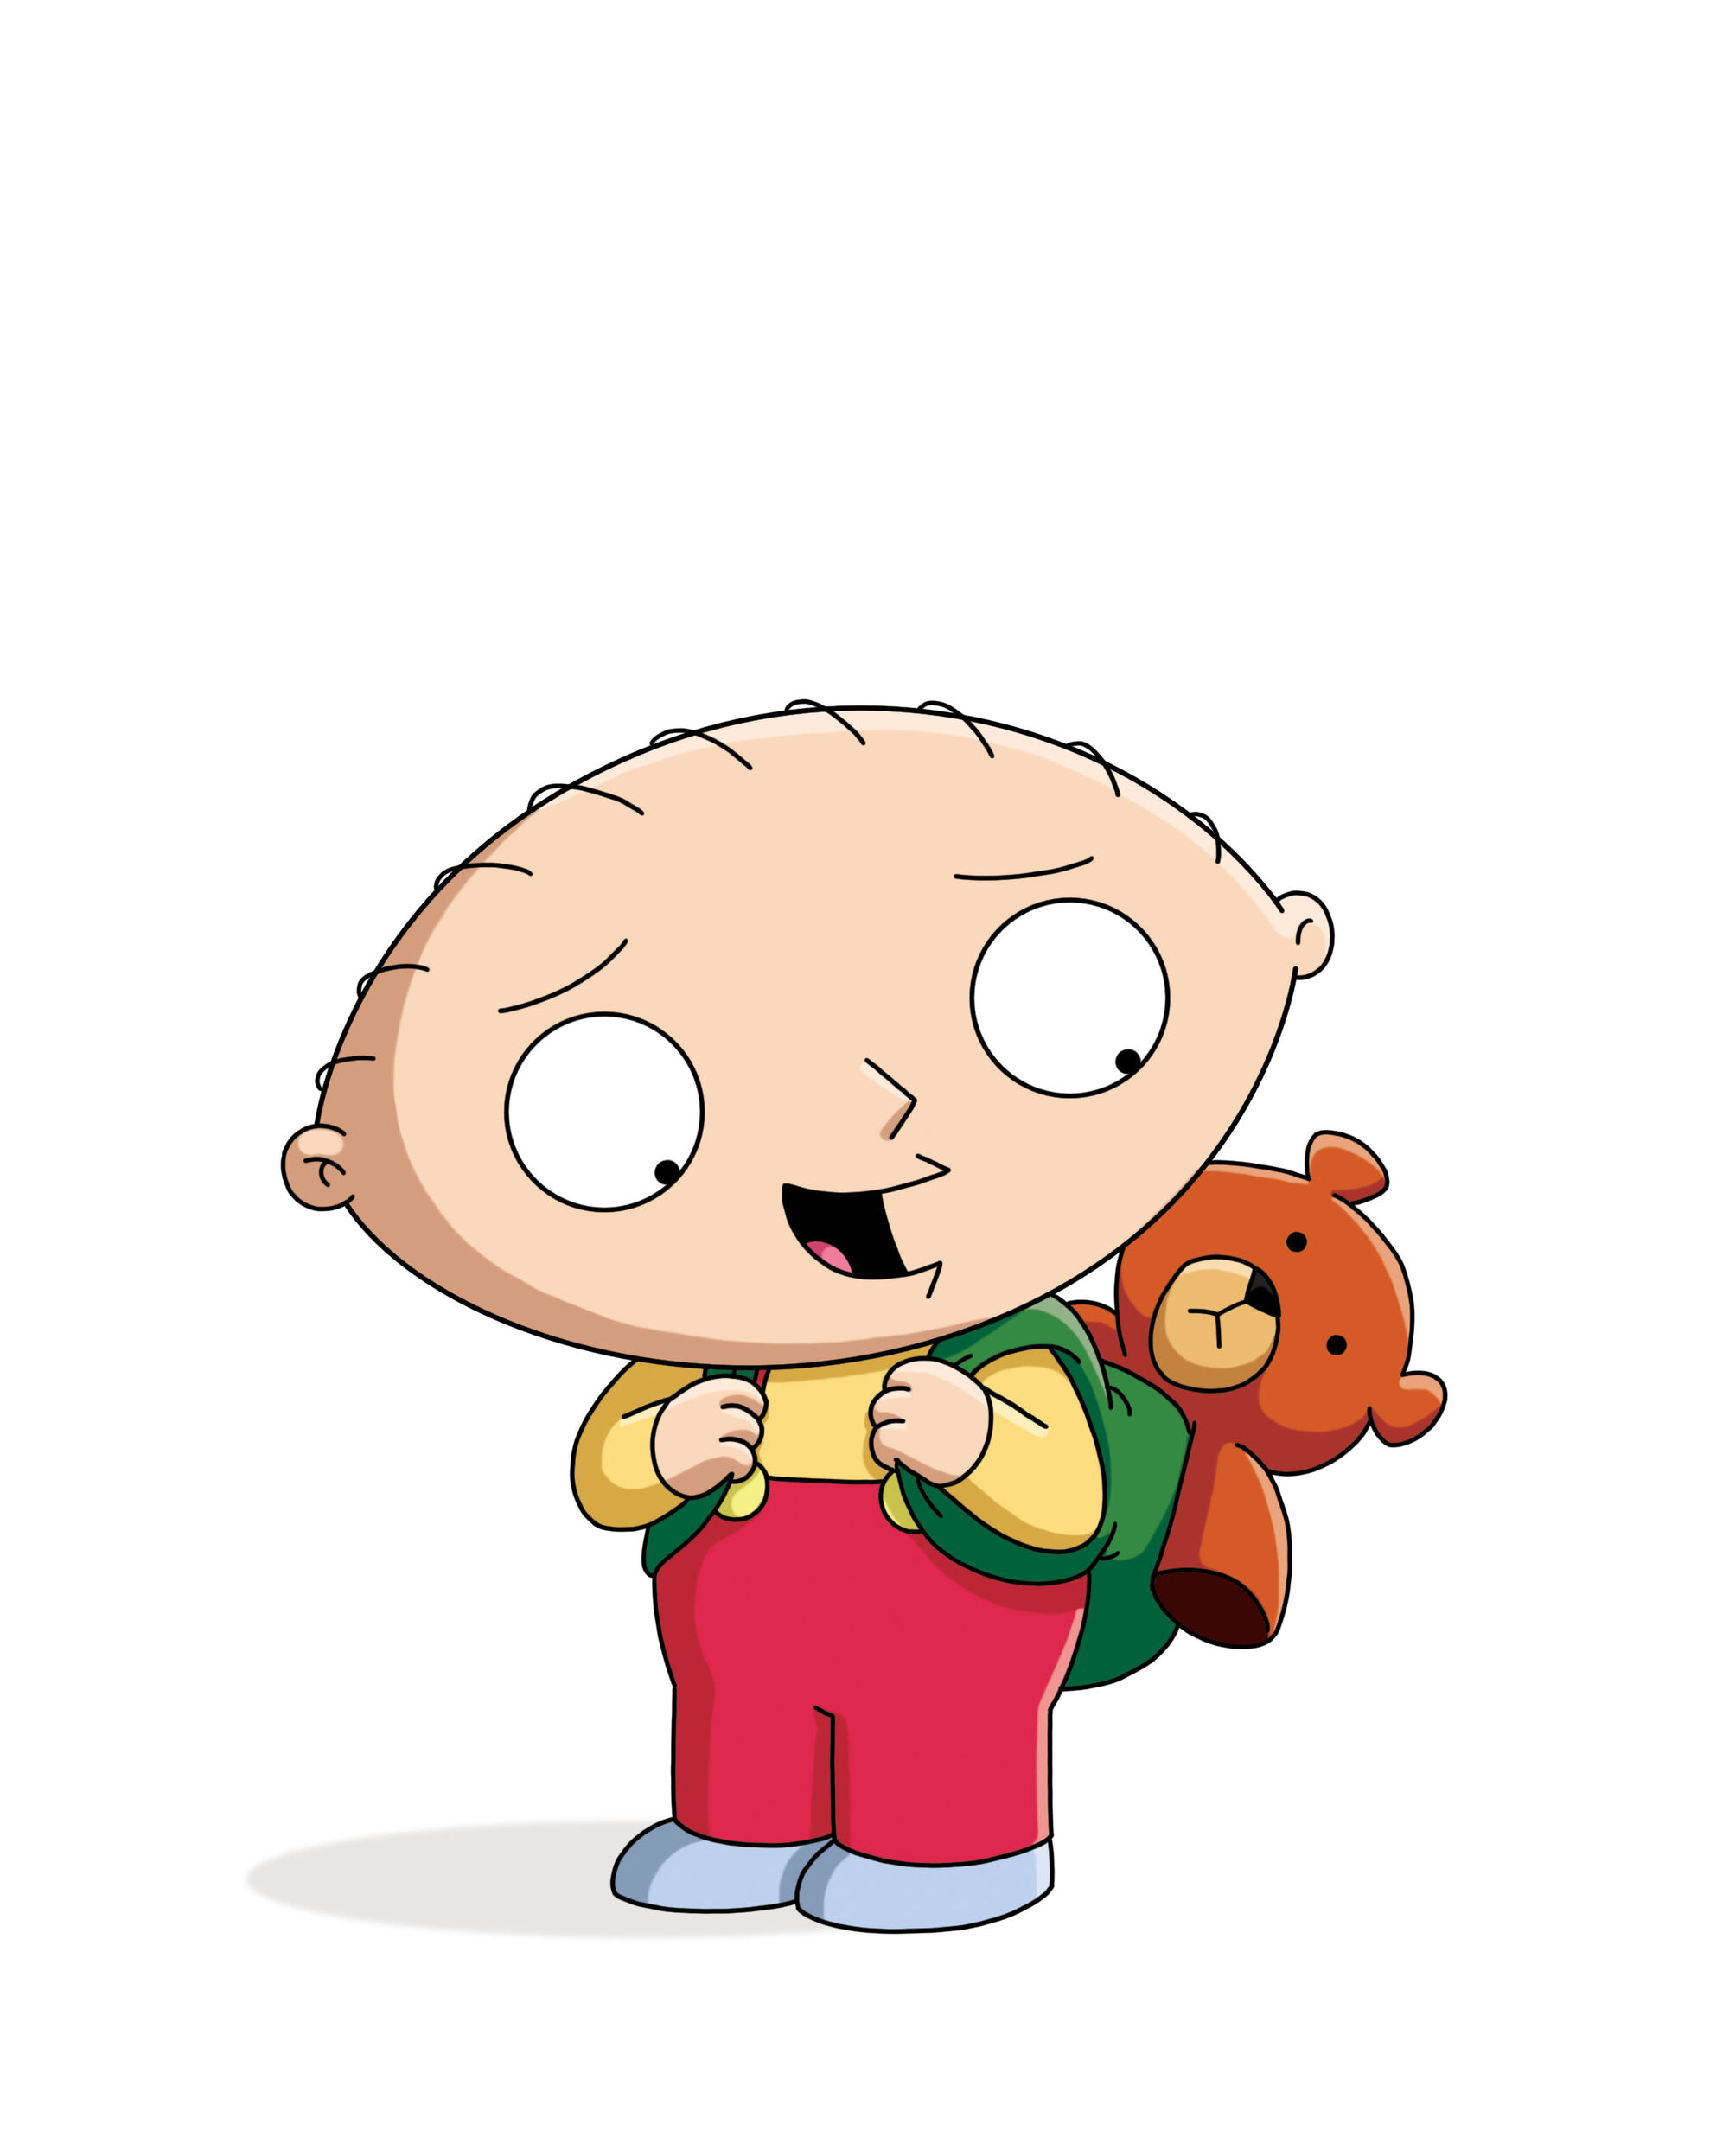 Stewie Griffin Family Guy Wiki Fandom